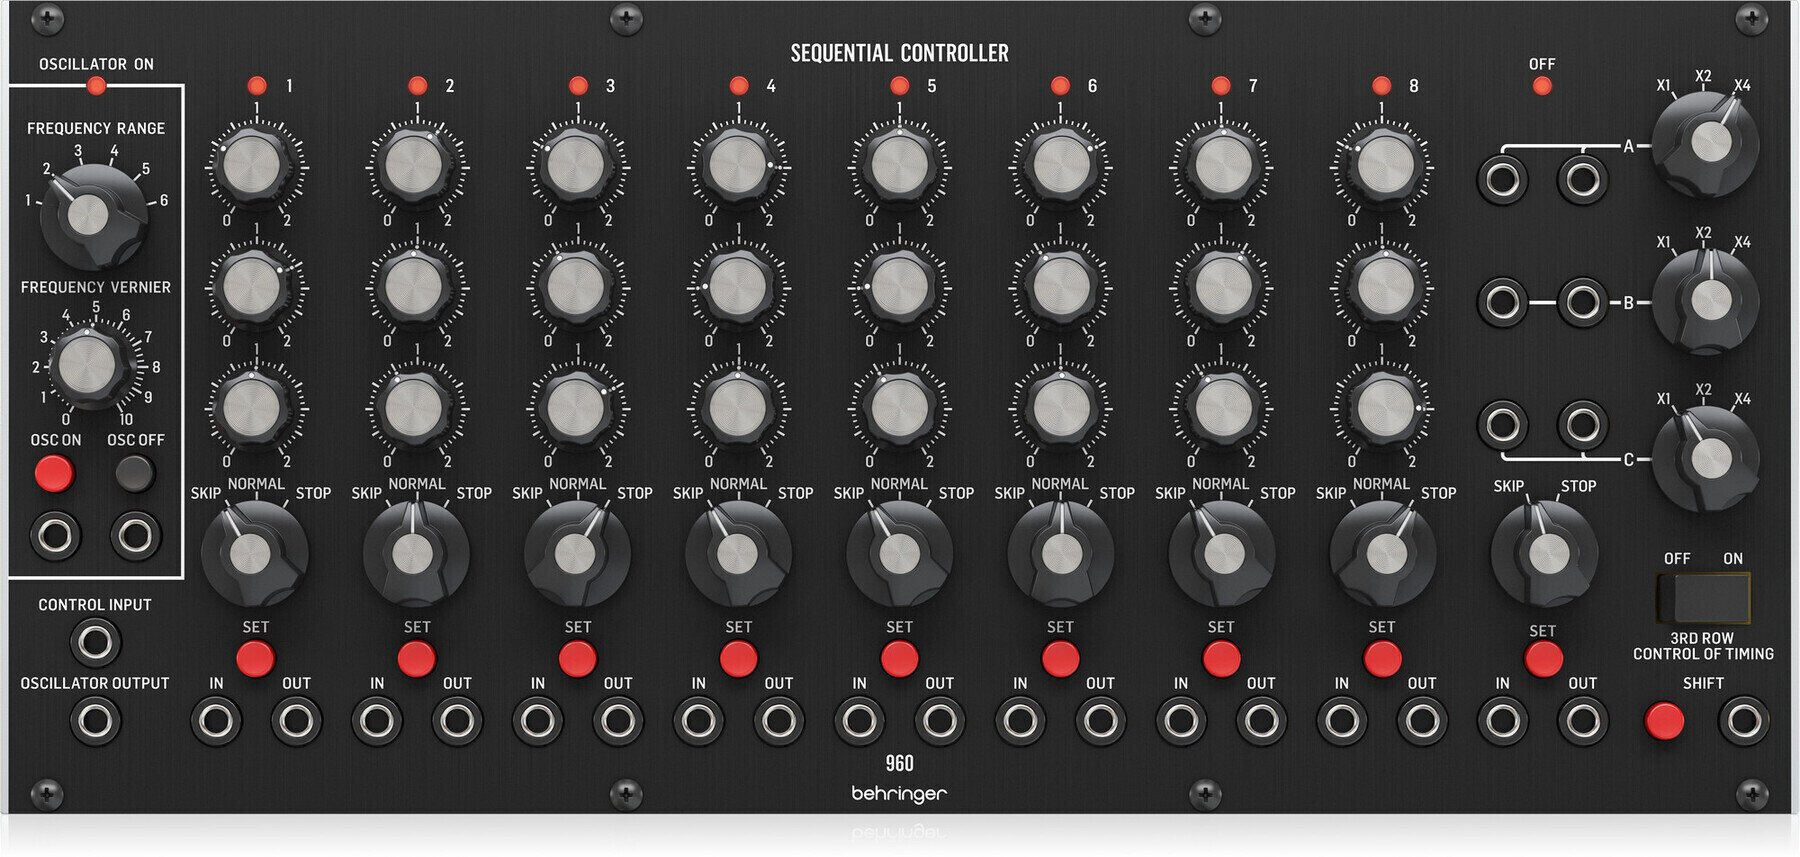 Sistema modular Behringer 960 Sequential Controller